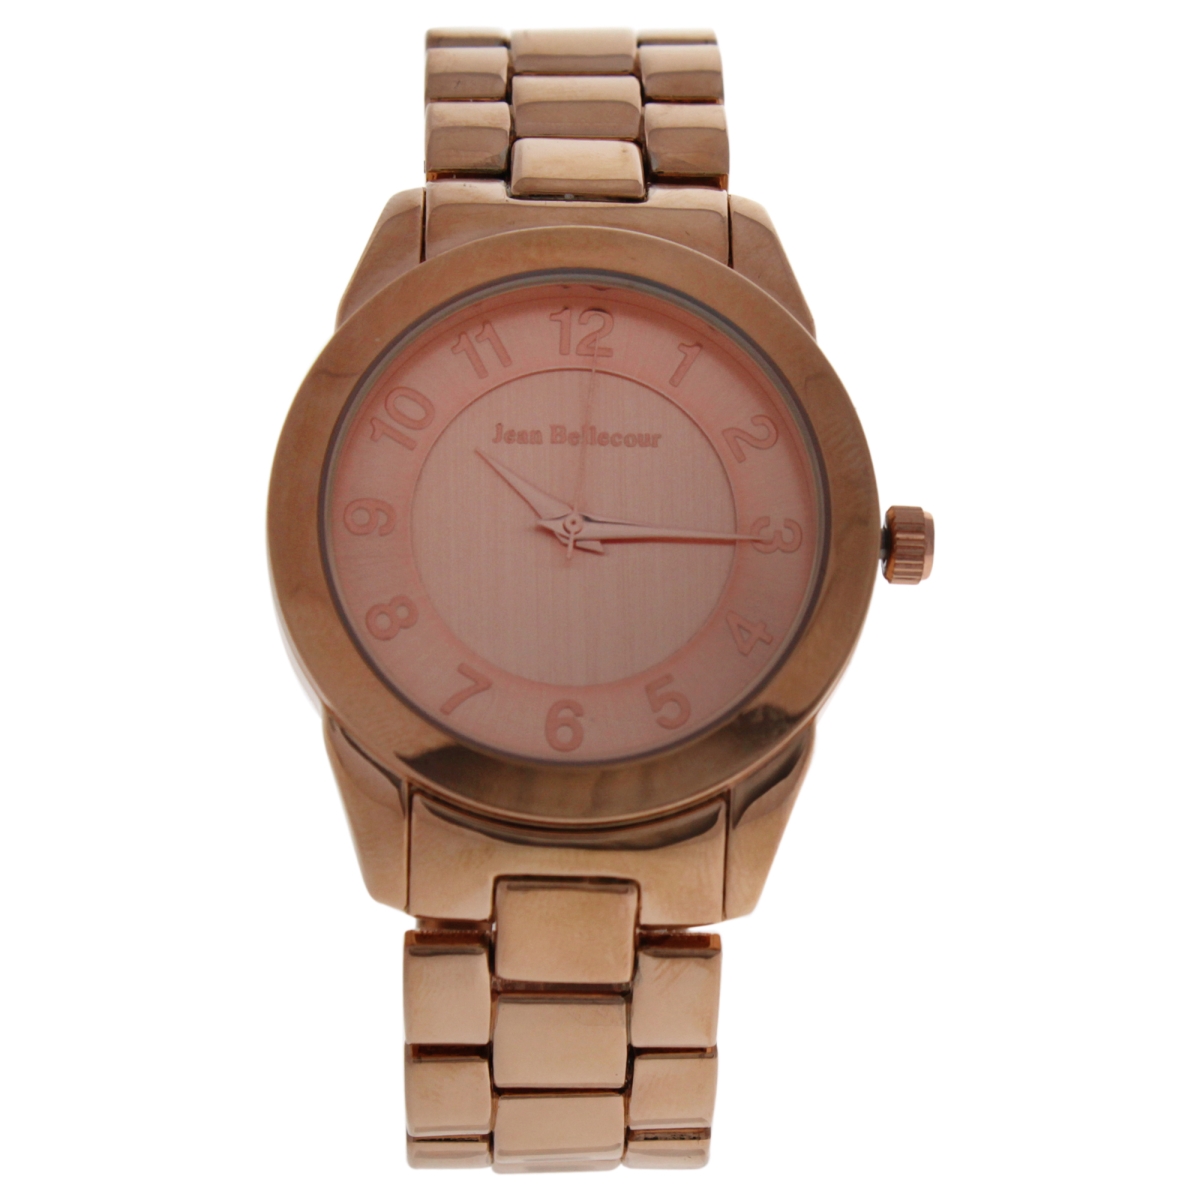 Picture of Jean Bellecour W-WAT-1417 Rose Gold Stainless Steel Bracelet Watch for Women - A0372-2